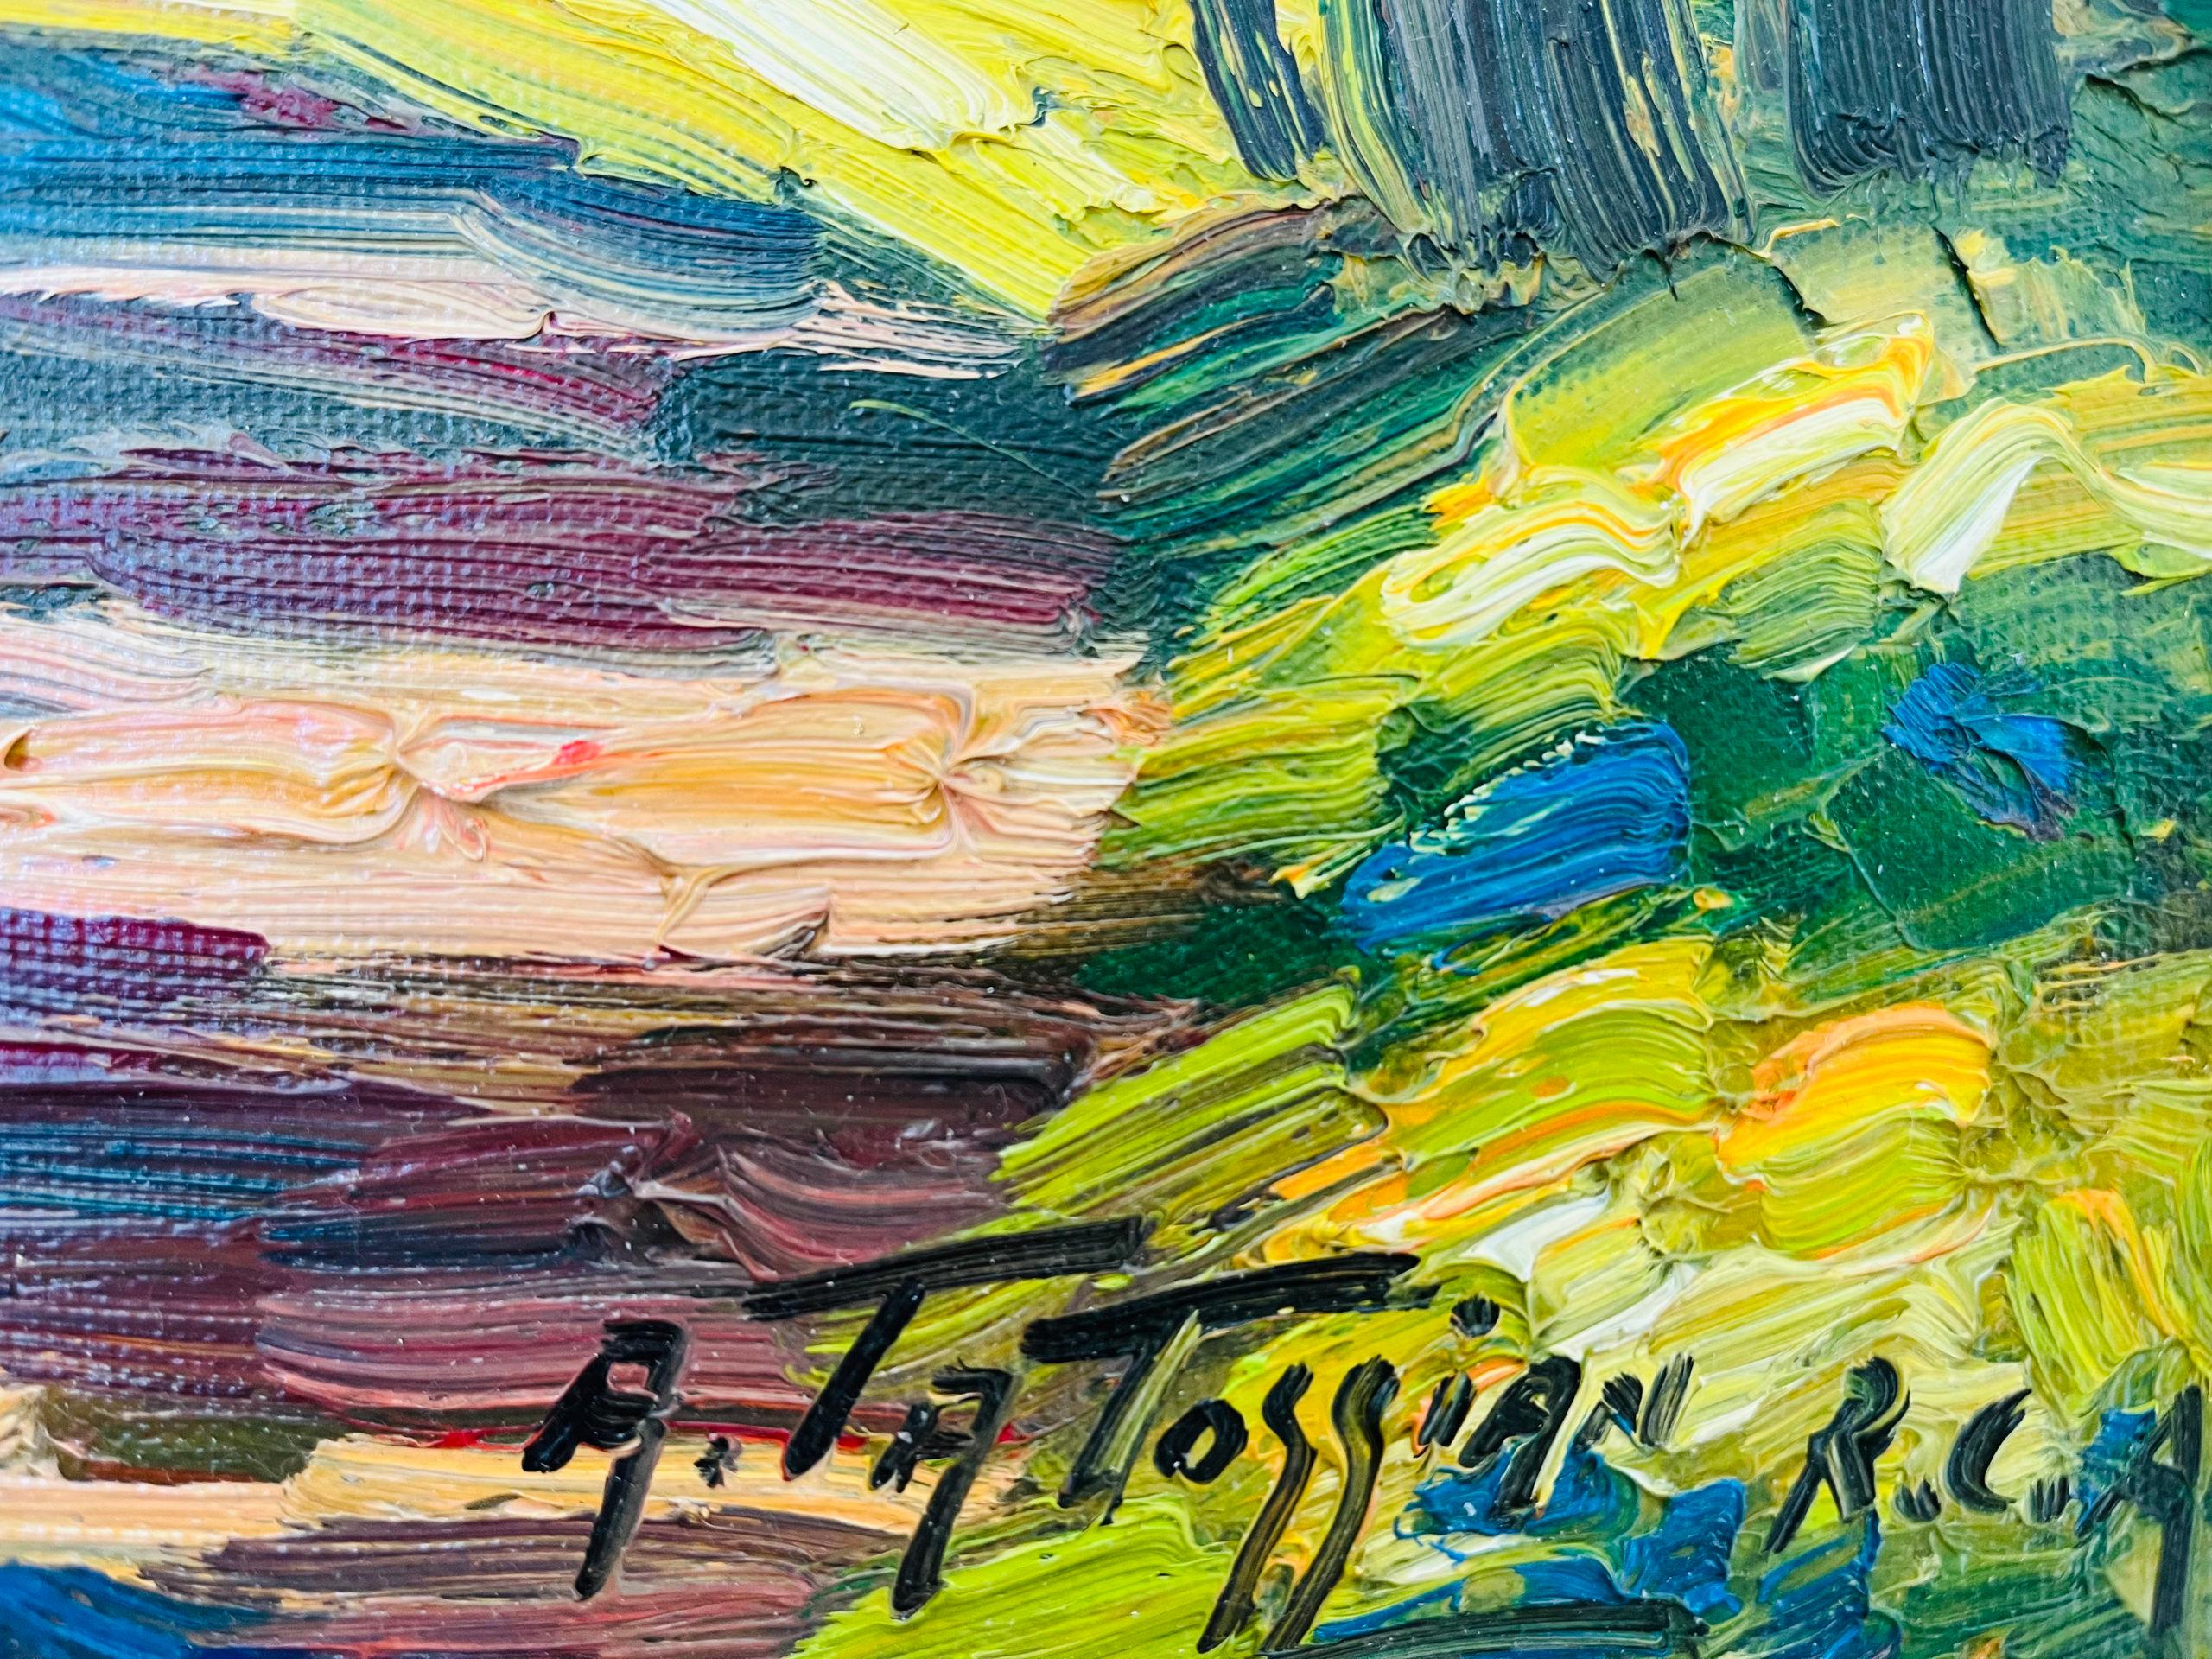 Armand Tatossian, Kanadier, 1948-2012
Burst of Light
Öl auf Leinwand
16 x 12 Zoll (Bild)
Signiert unten rechts: A. Tatossian
Signiert, verso betitelt
gerahmt